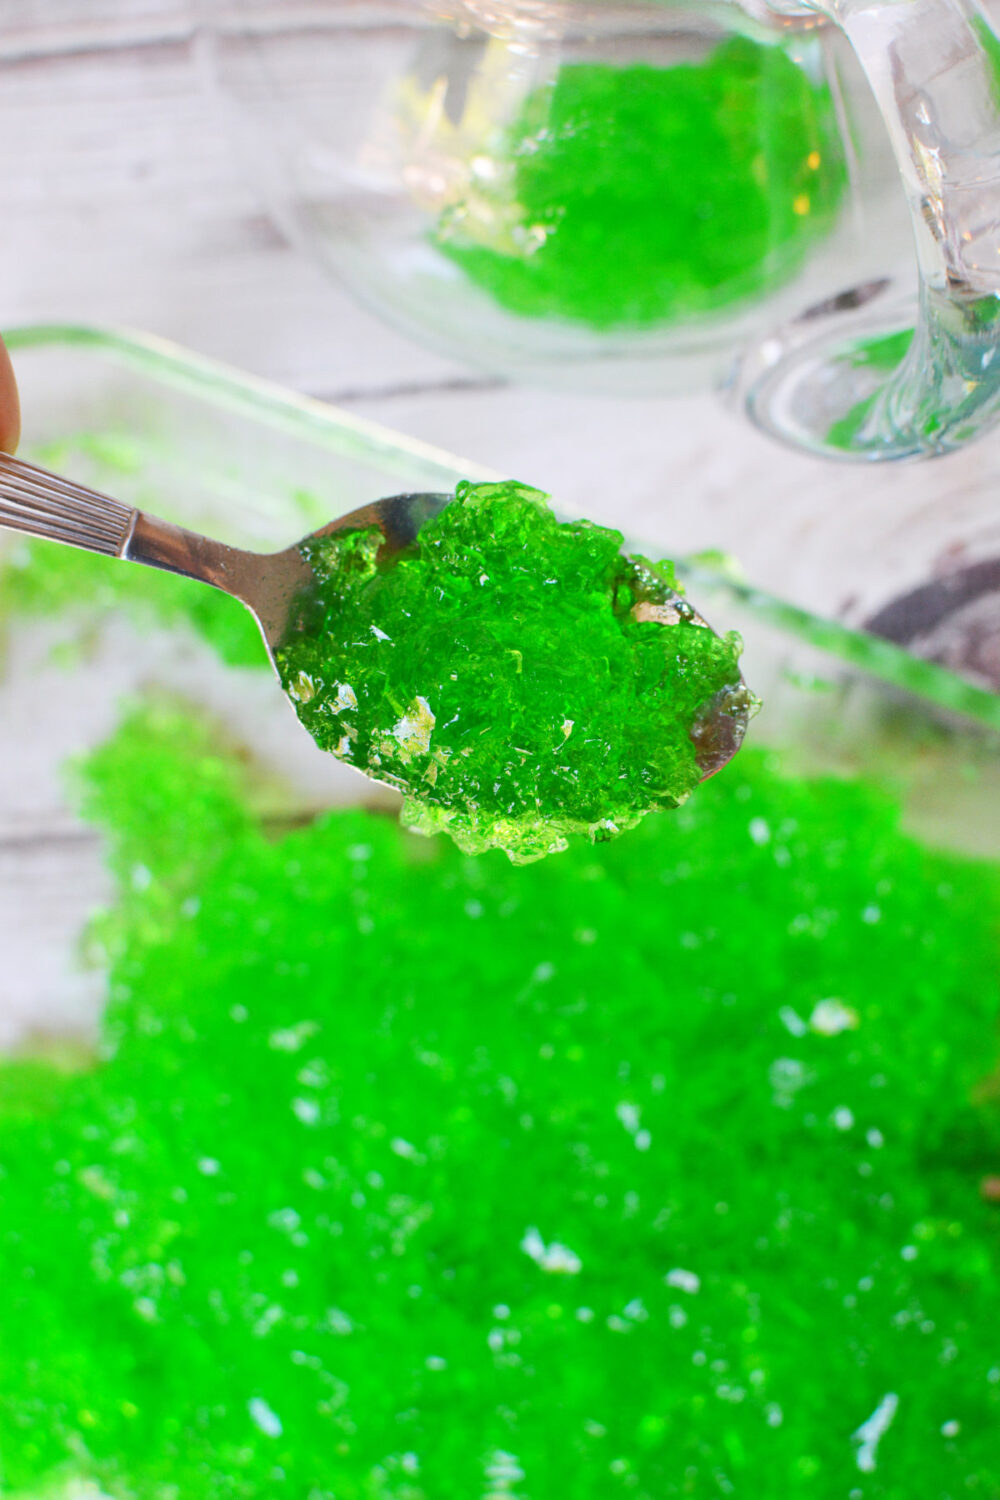 Shredded green jello on a spoon.